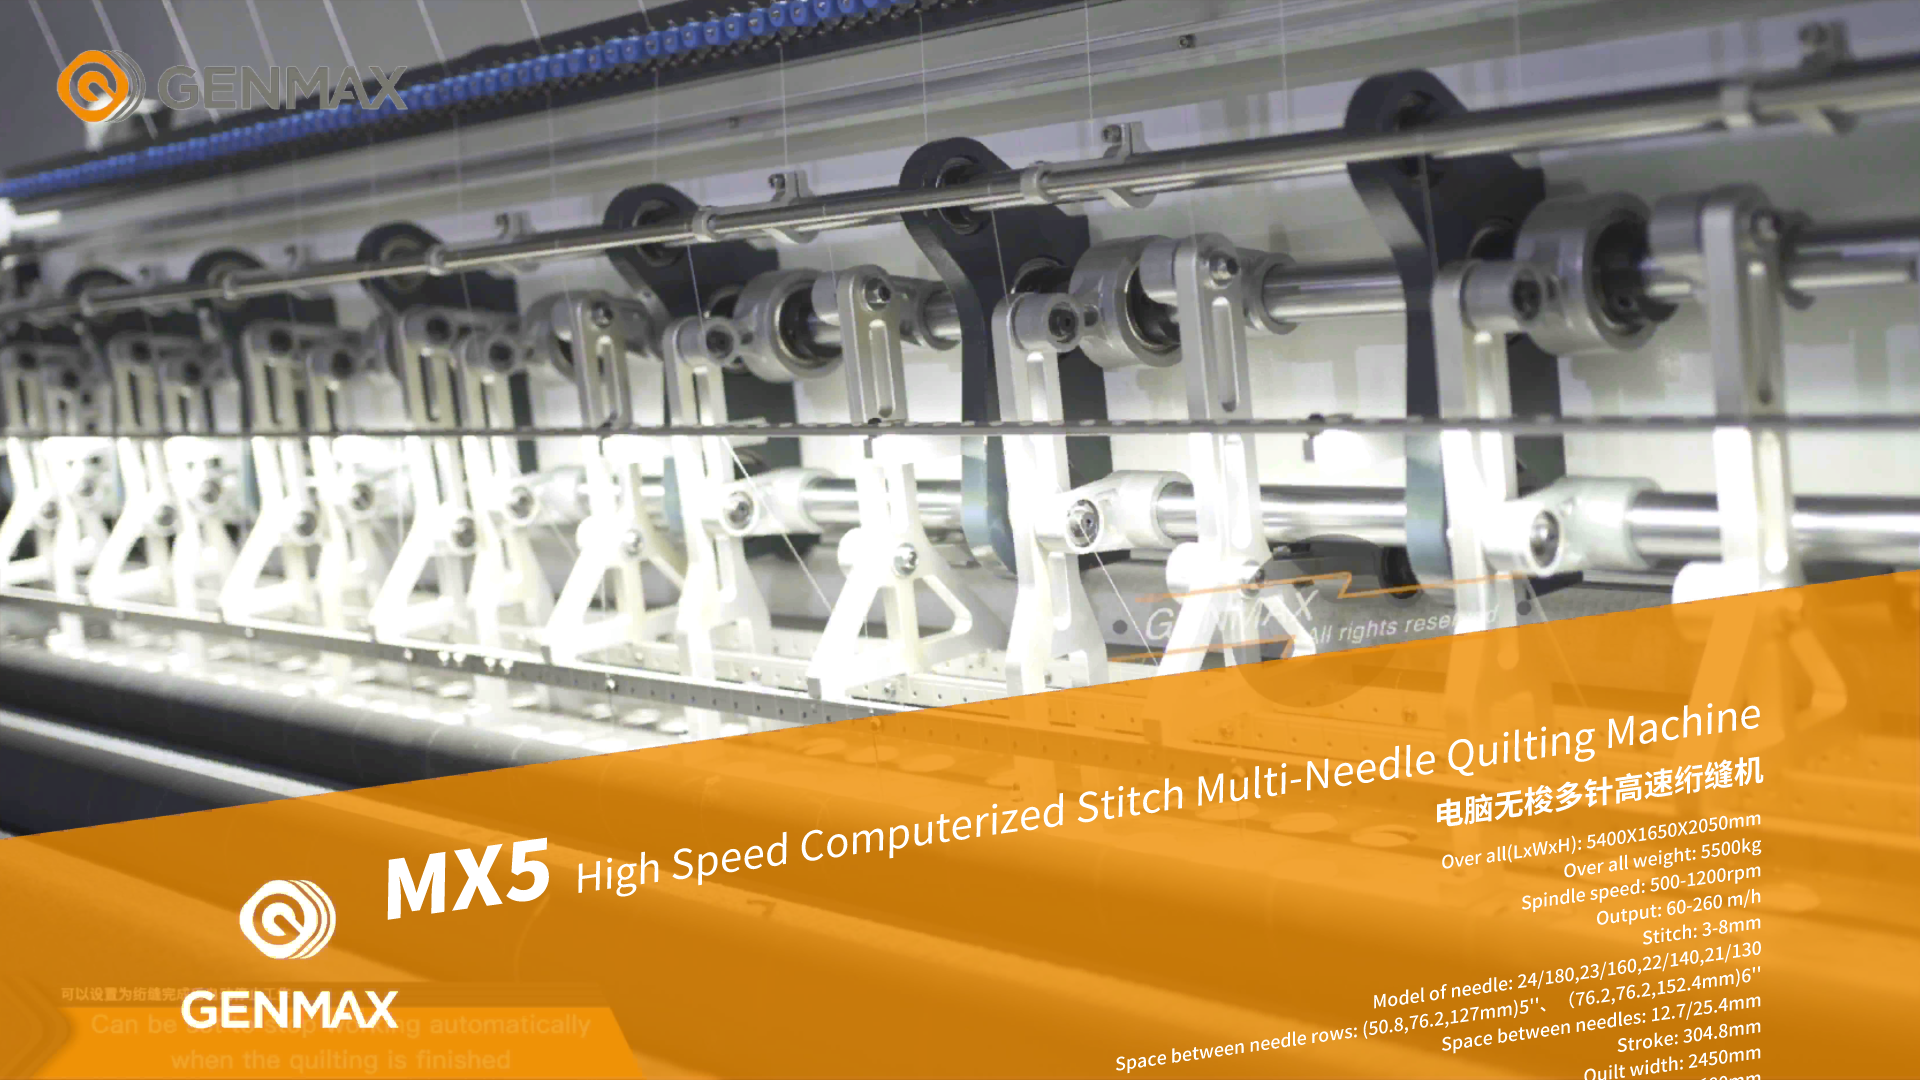 Machine Genmax - MX5 Machine à piquer multi-aiguilles informatisée à grande vitesse du client marocain